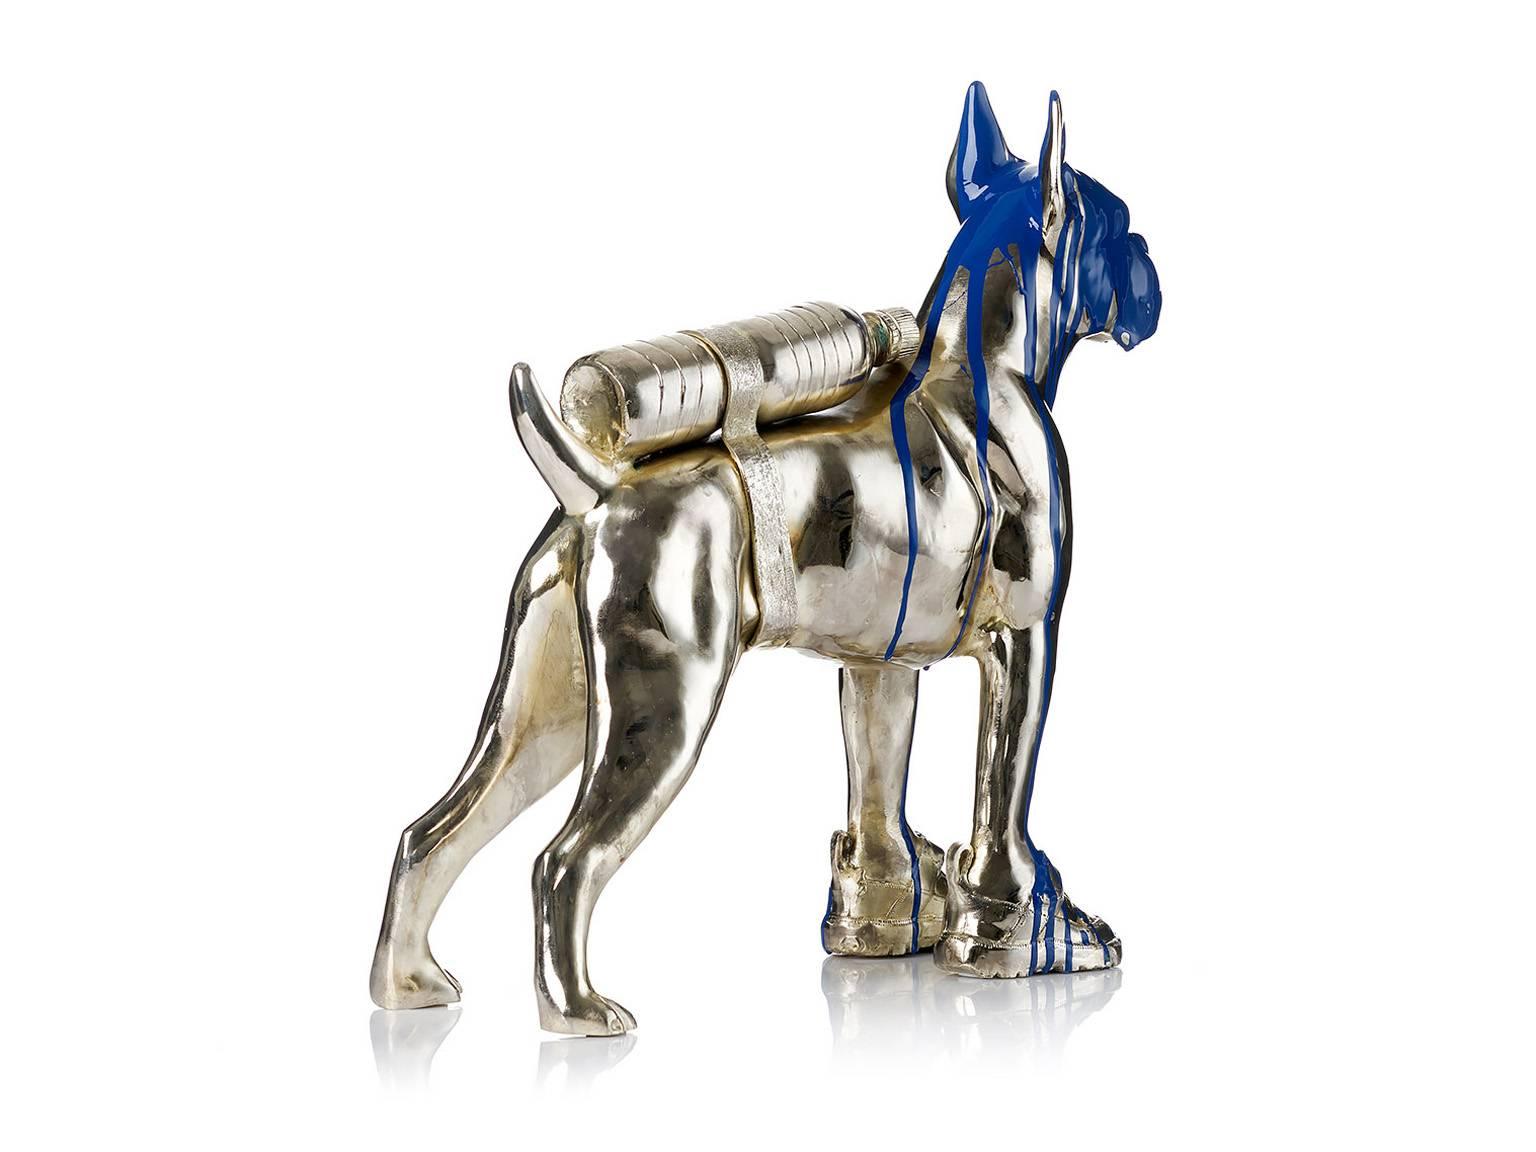 Cloned Bulldog with pet bottle  - Pop Art Sculpture by William Sweetlove